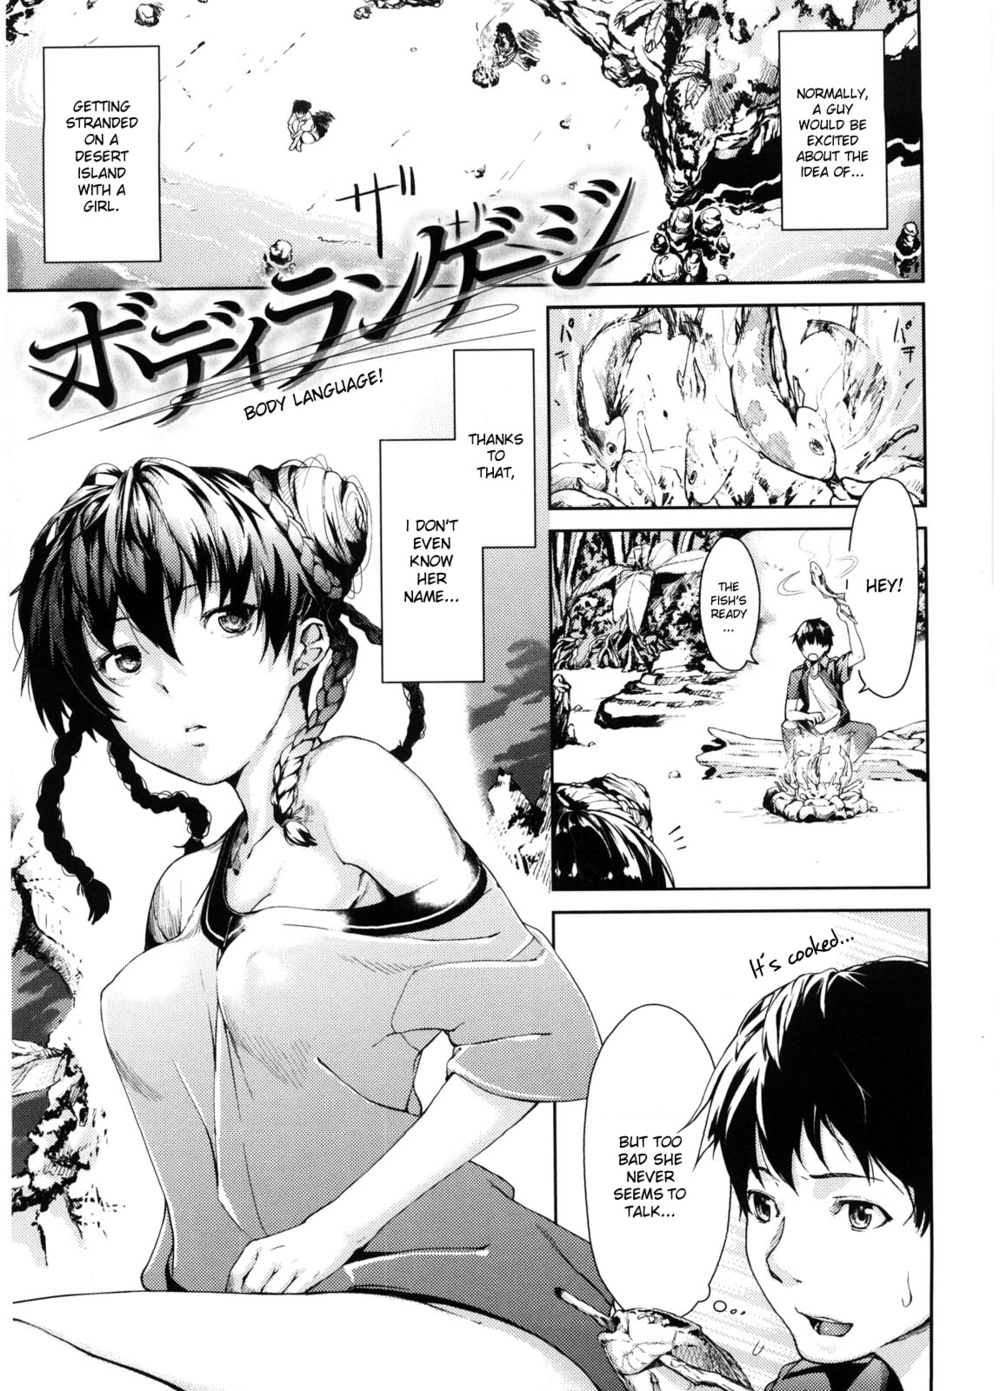 Hentai Manga Comic-Body Language-Read-1